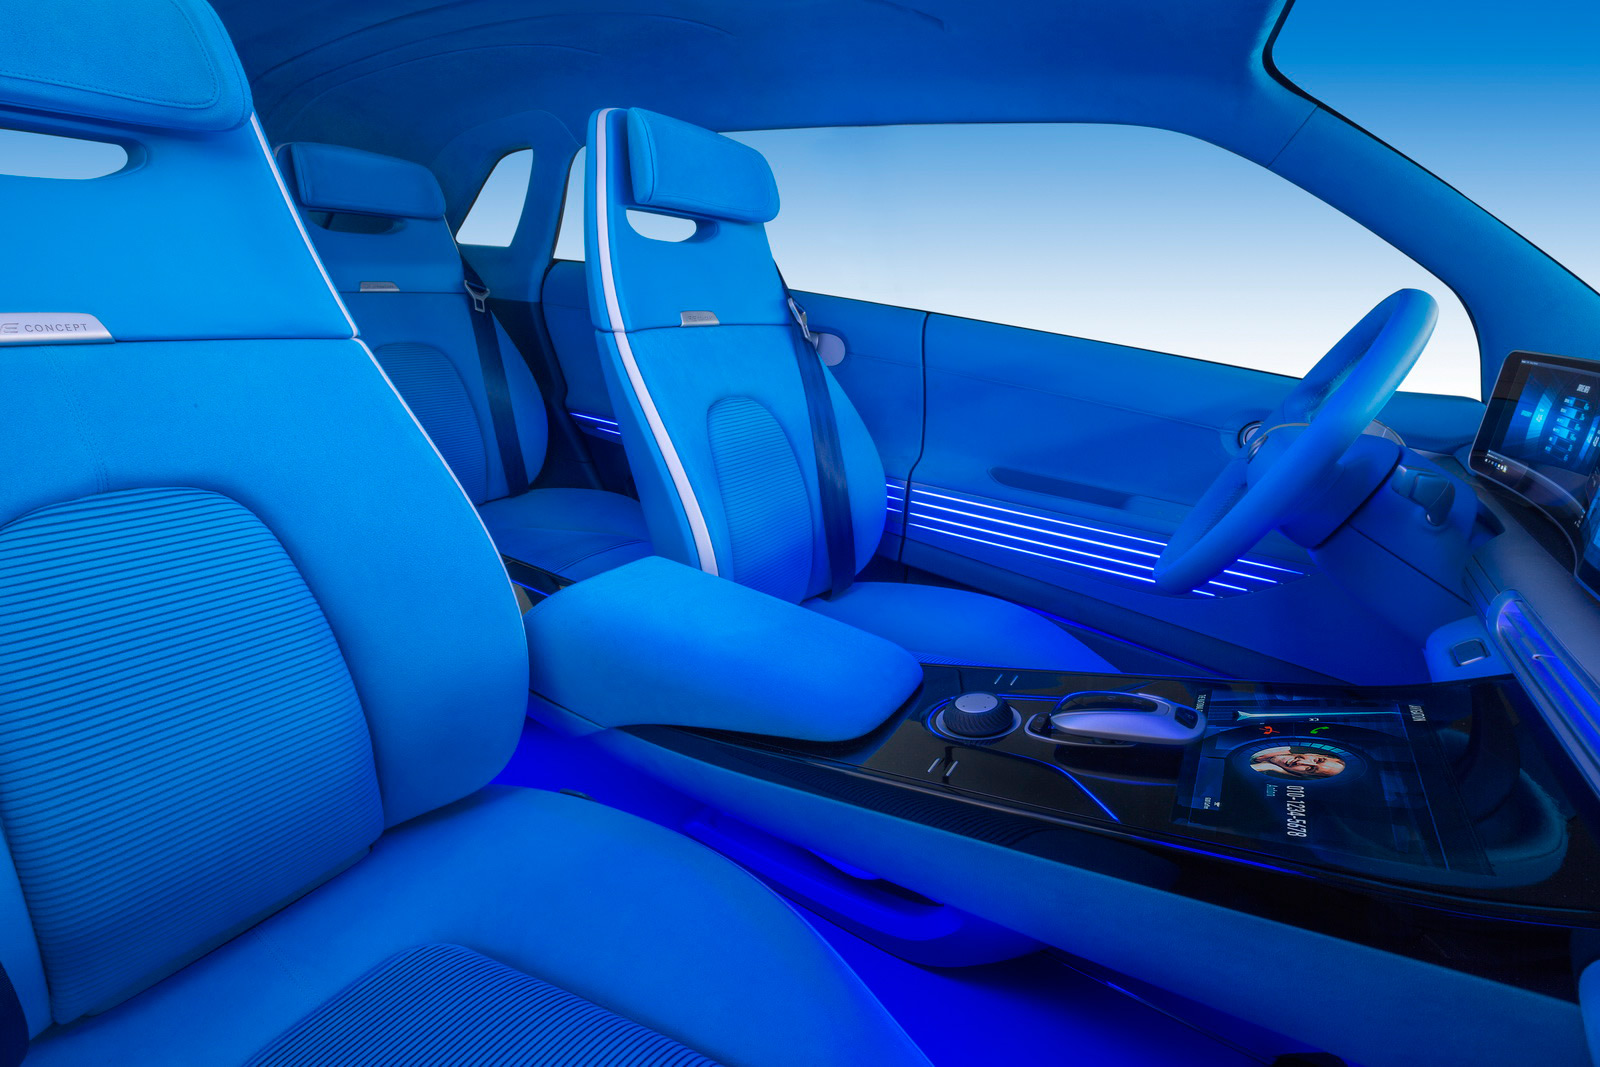 Hyundai FE Fuel Cell Concept interior